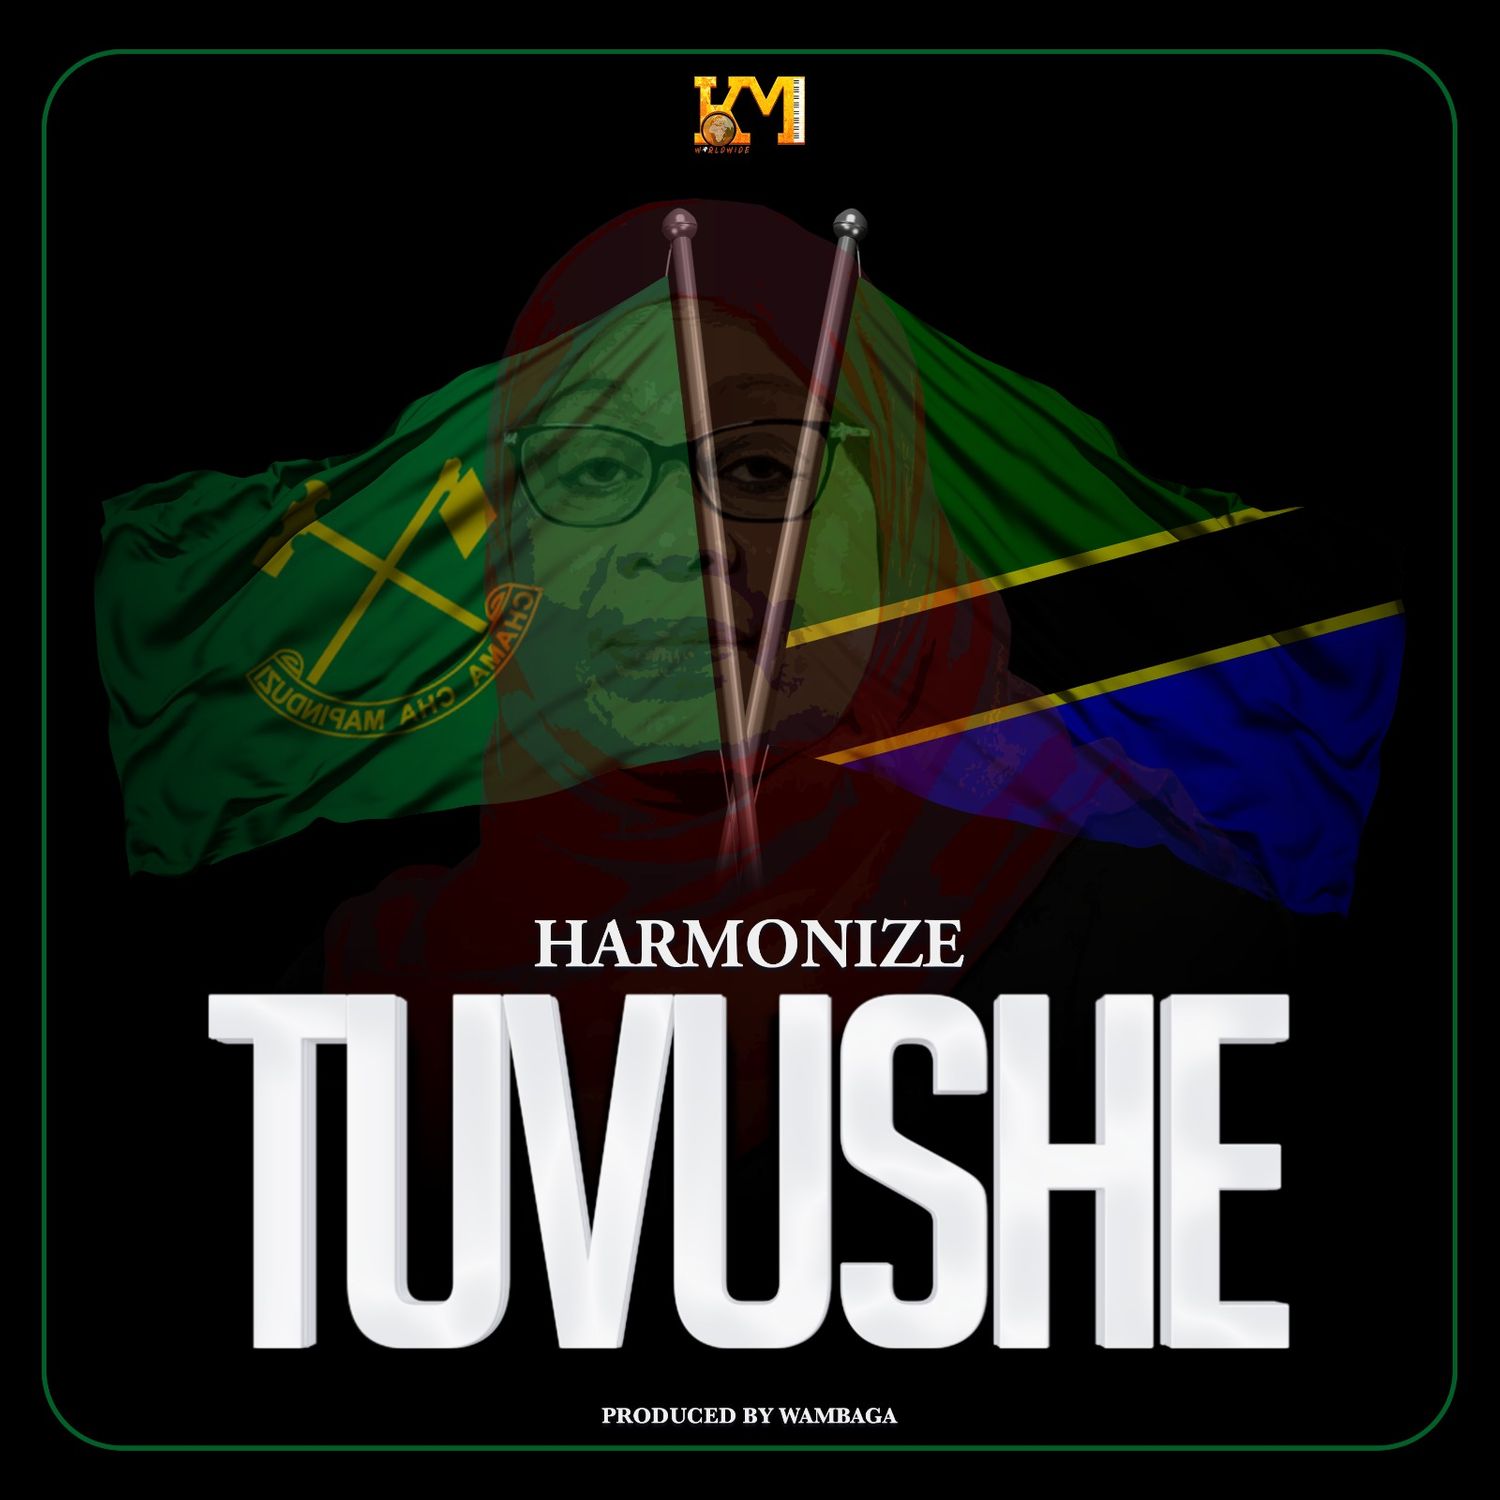 Harmonize - Tuvushe